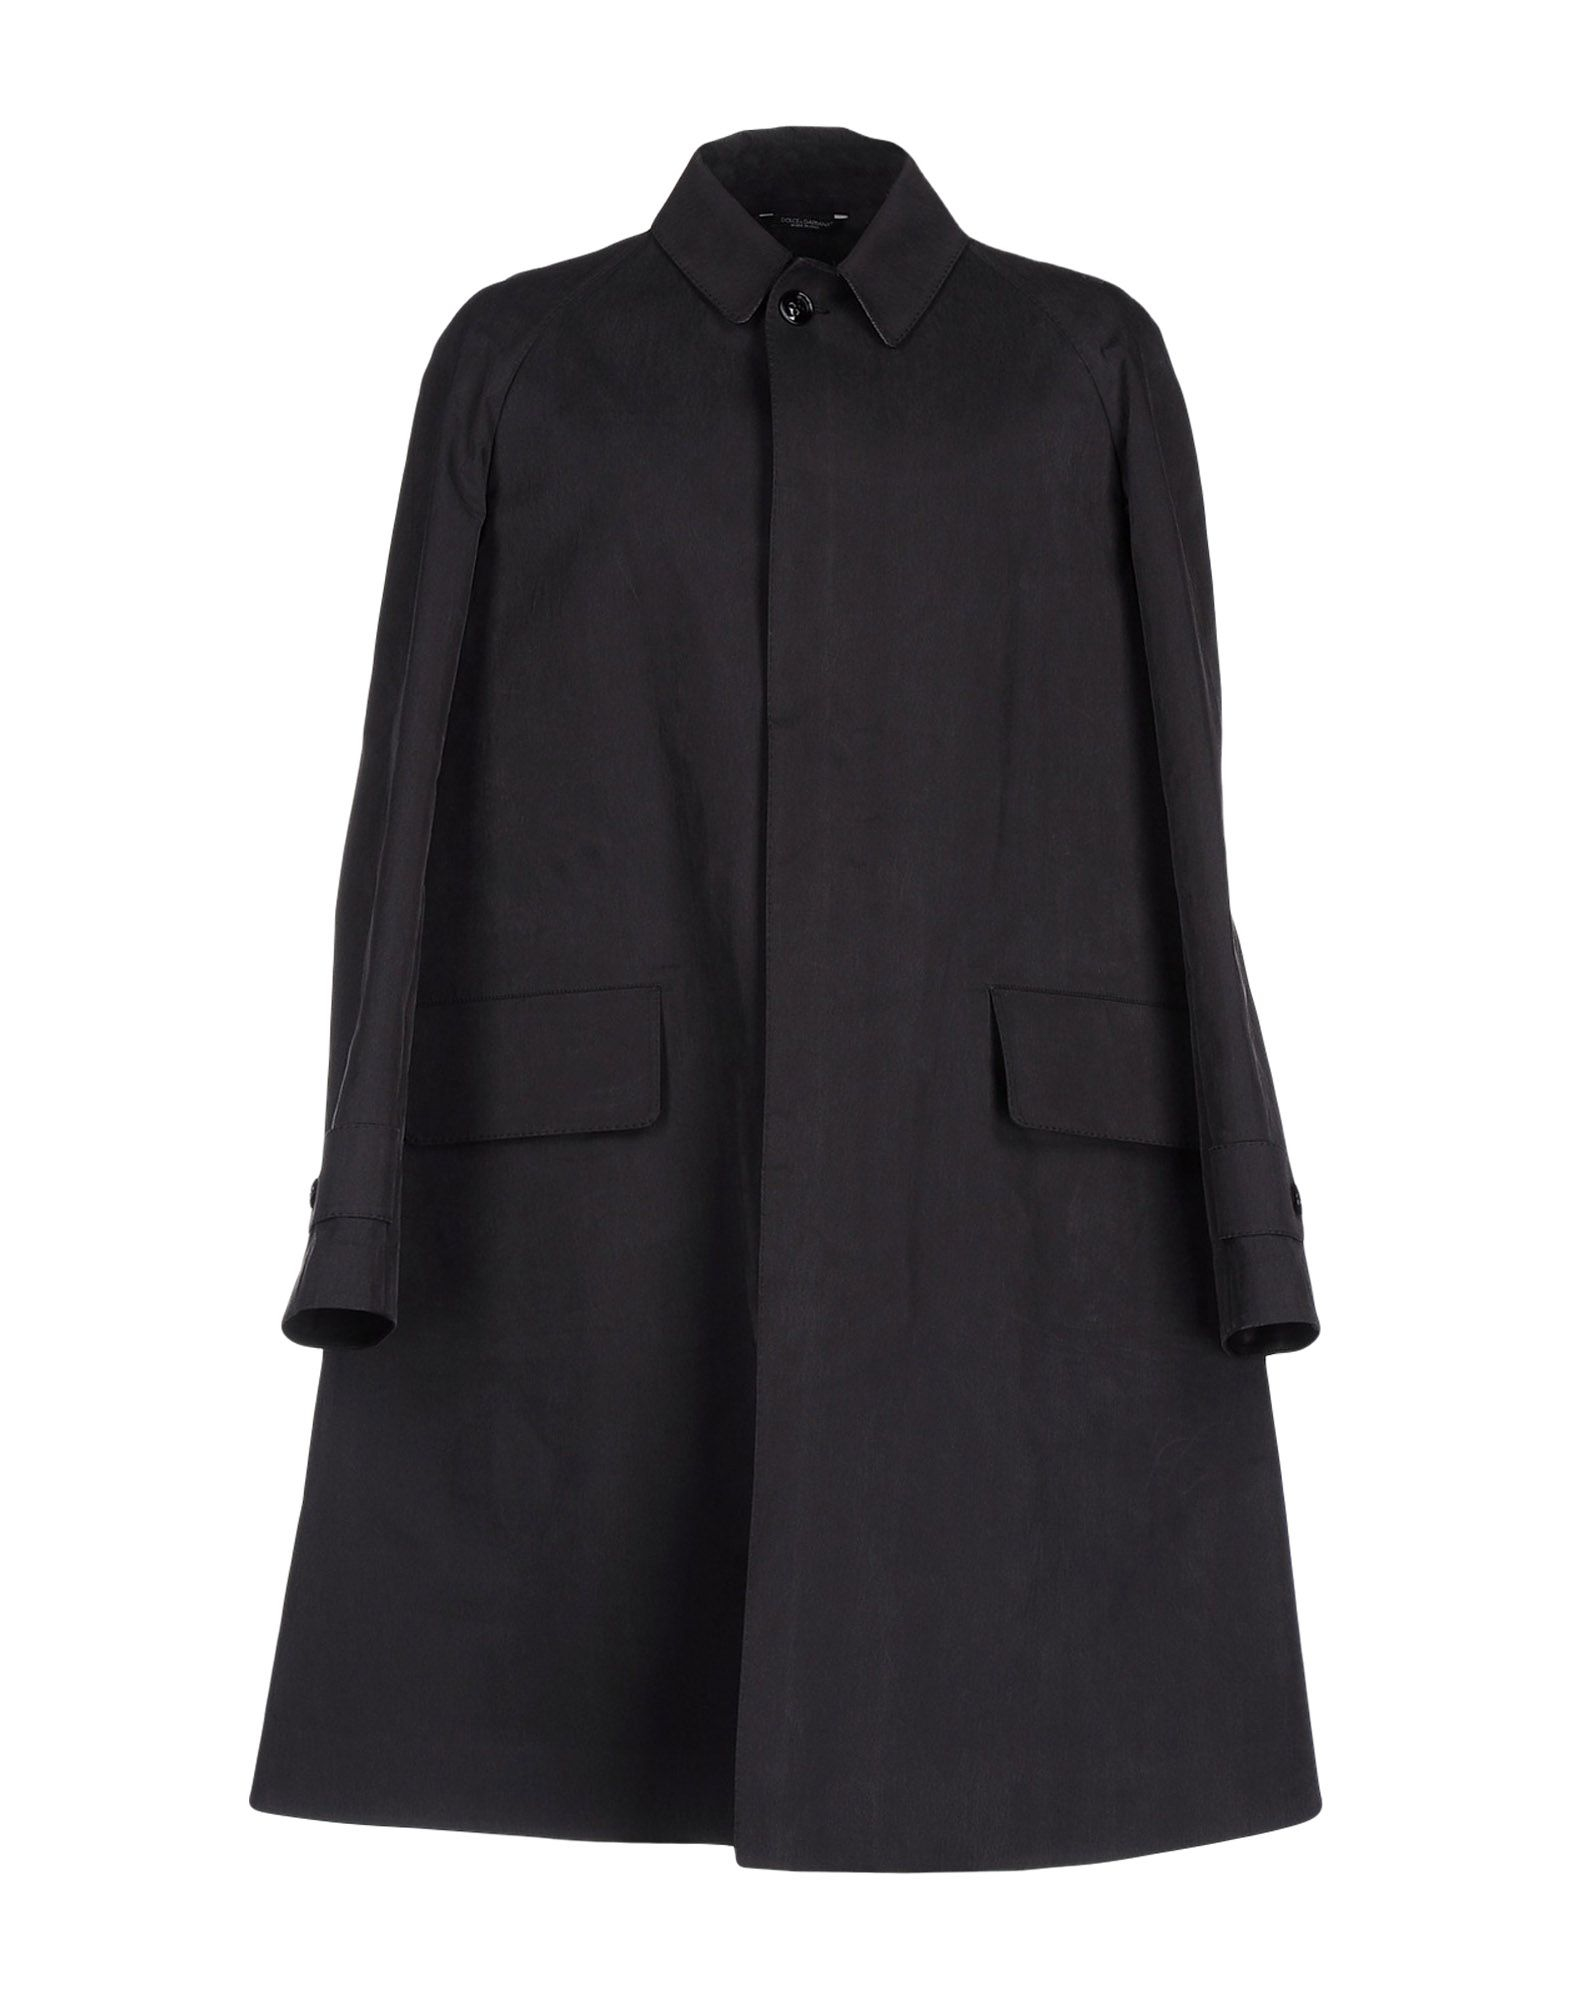 Dolce & gabbana Overcoat in Black for Men | Lyst